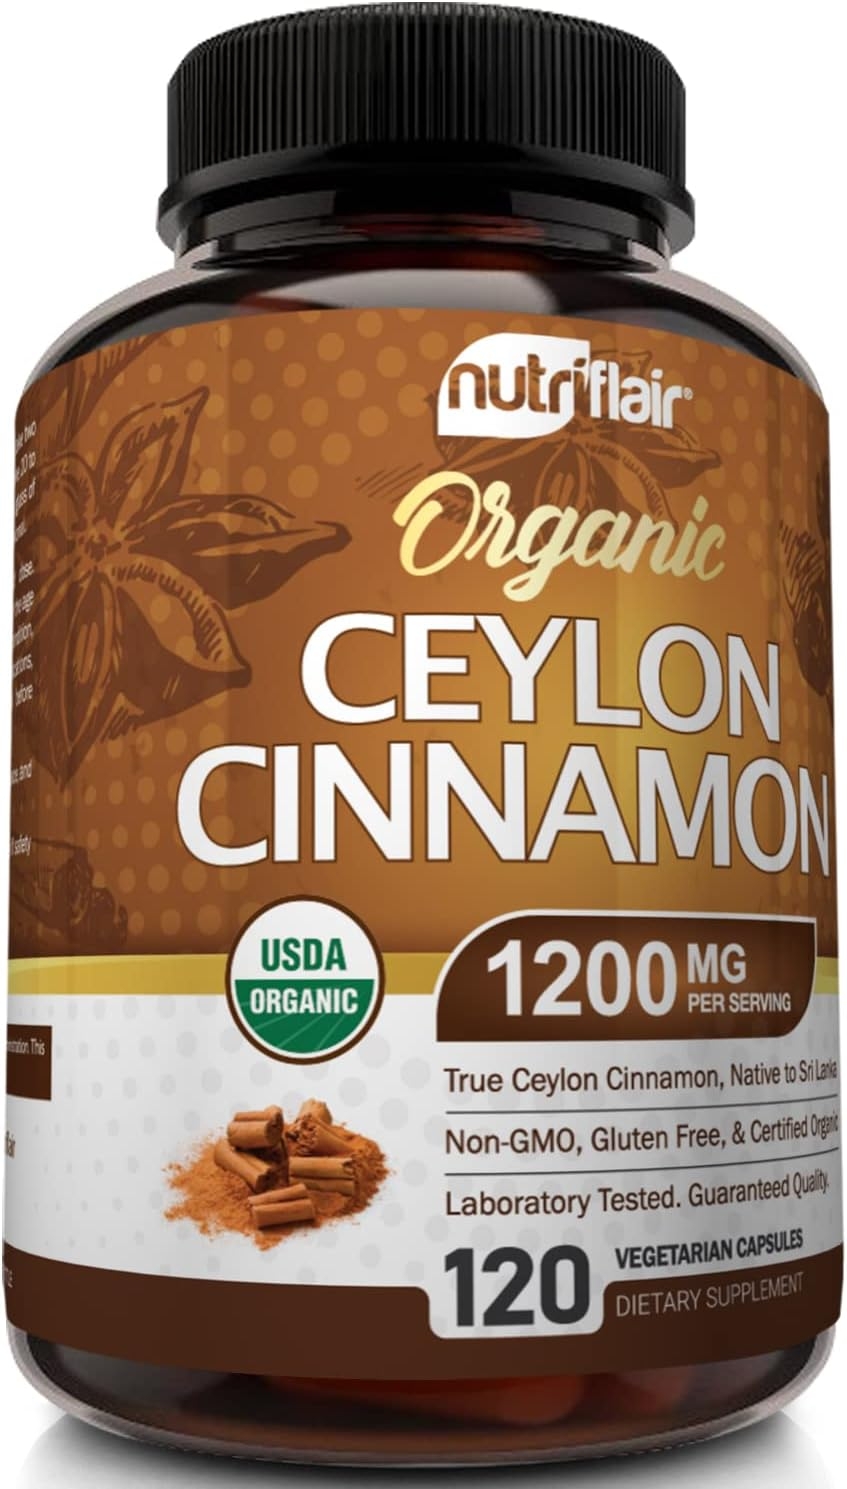 NutriFlair Organic Ceylon Cinnamon (100% Certified Organic Ceylon Cinnamon) 1200mg per Serving, 120 Capsules - Joints, Inflammatory, Antioxidant, Glucose Metabolism Support- True Sri Lanka Cinnamon